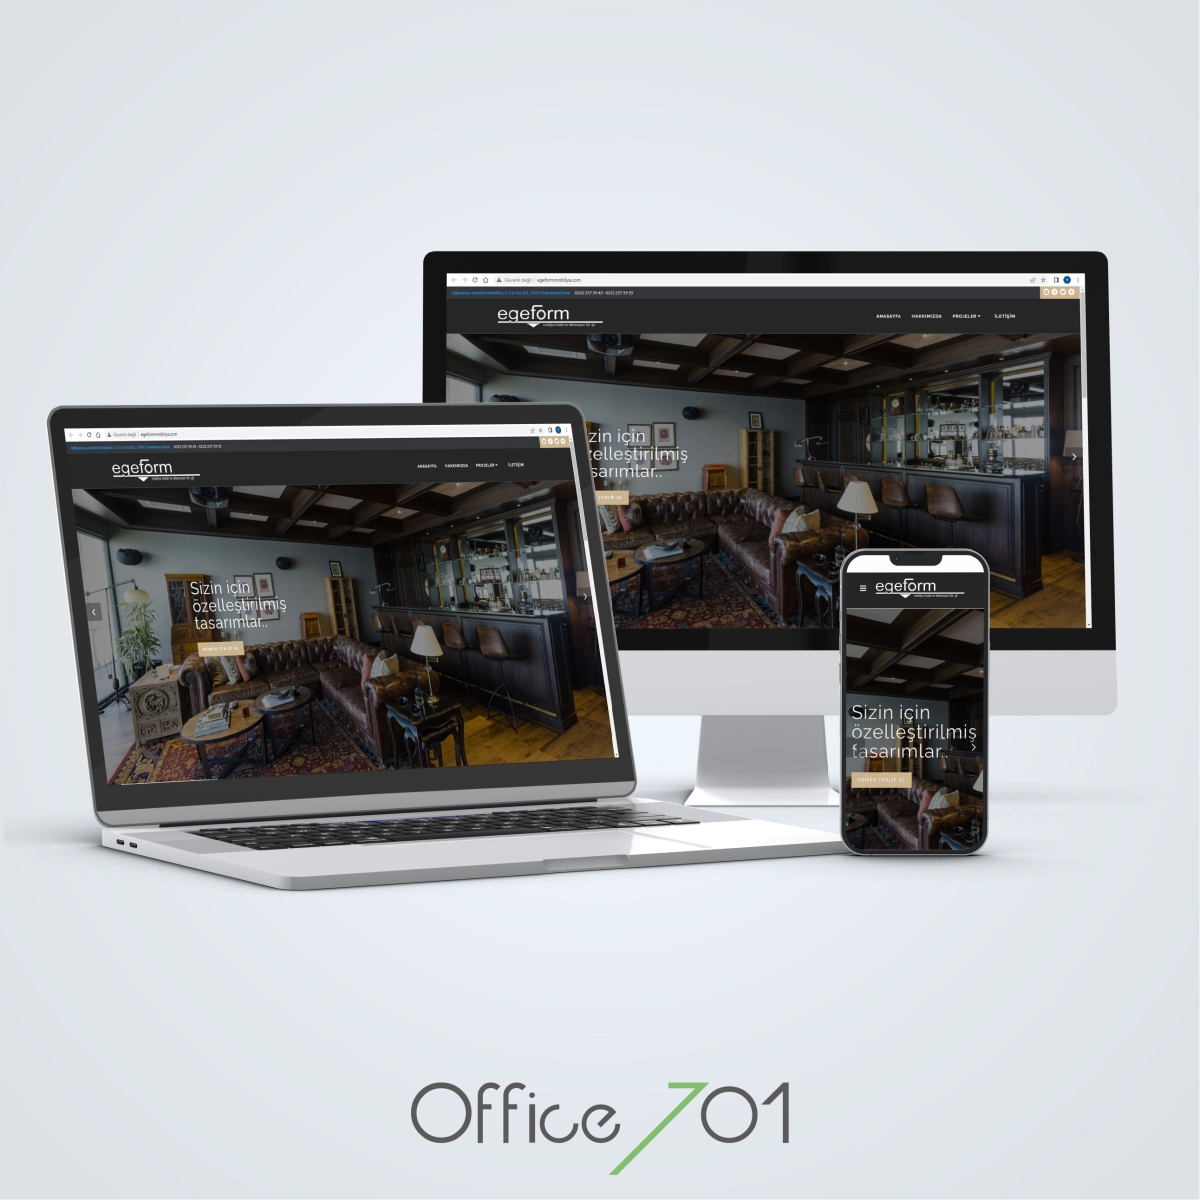 Office701 | Ege Form Mobilya Web Sitesi